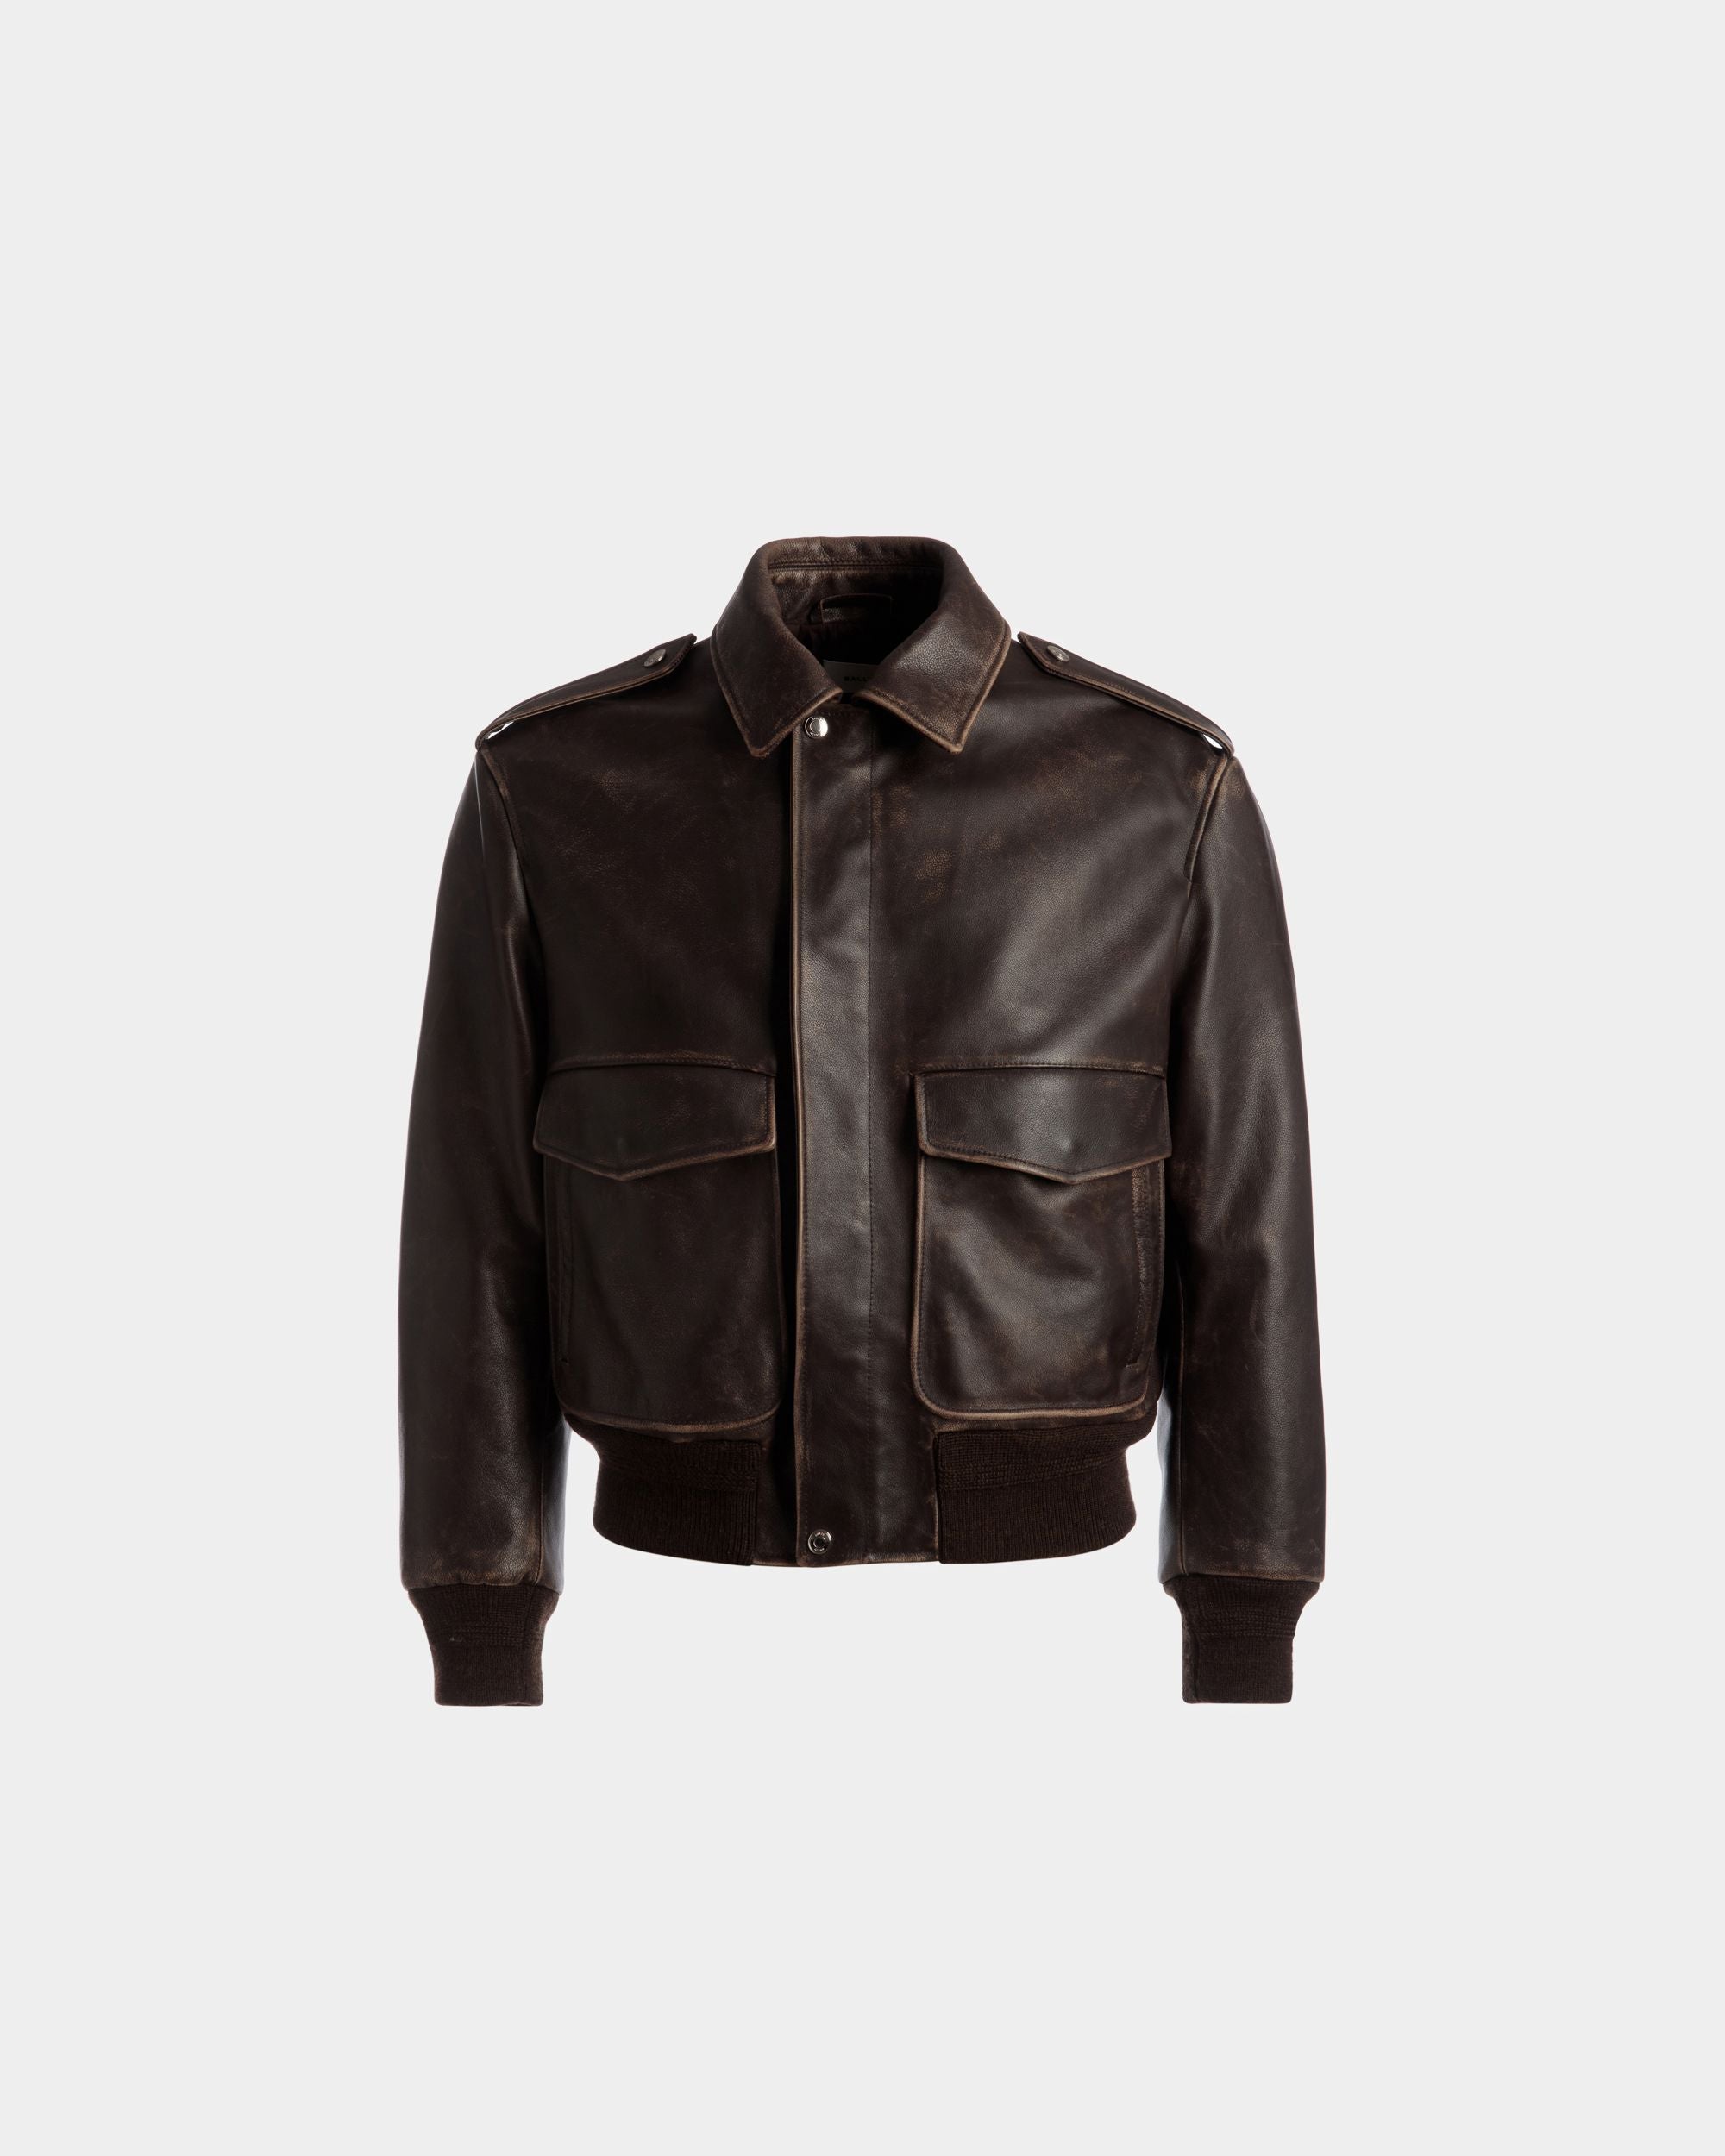 Bomber Jacket | Men's Jacket | Brown Leather | Bally | Still Life Front